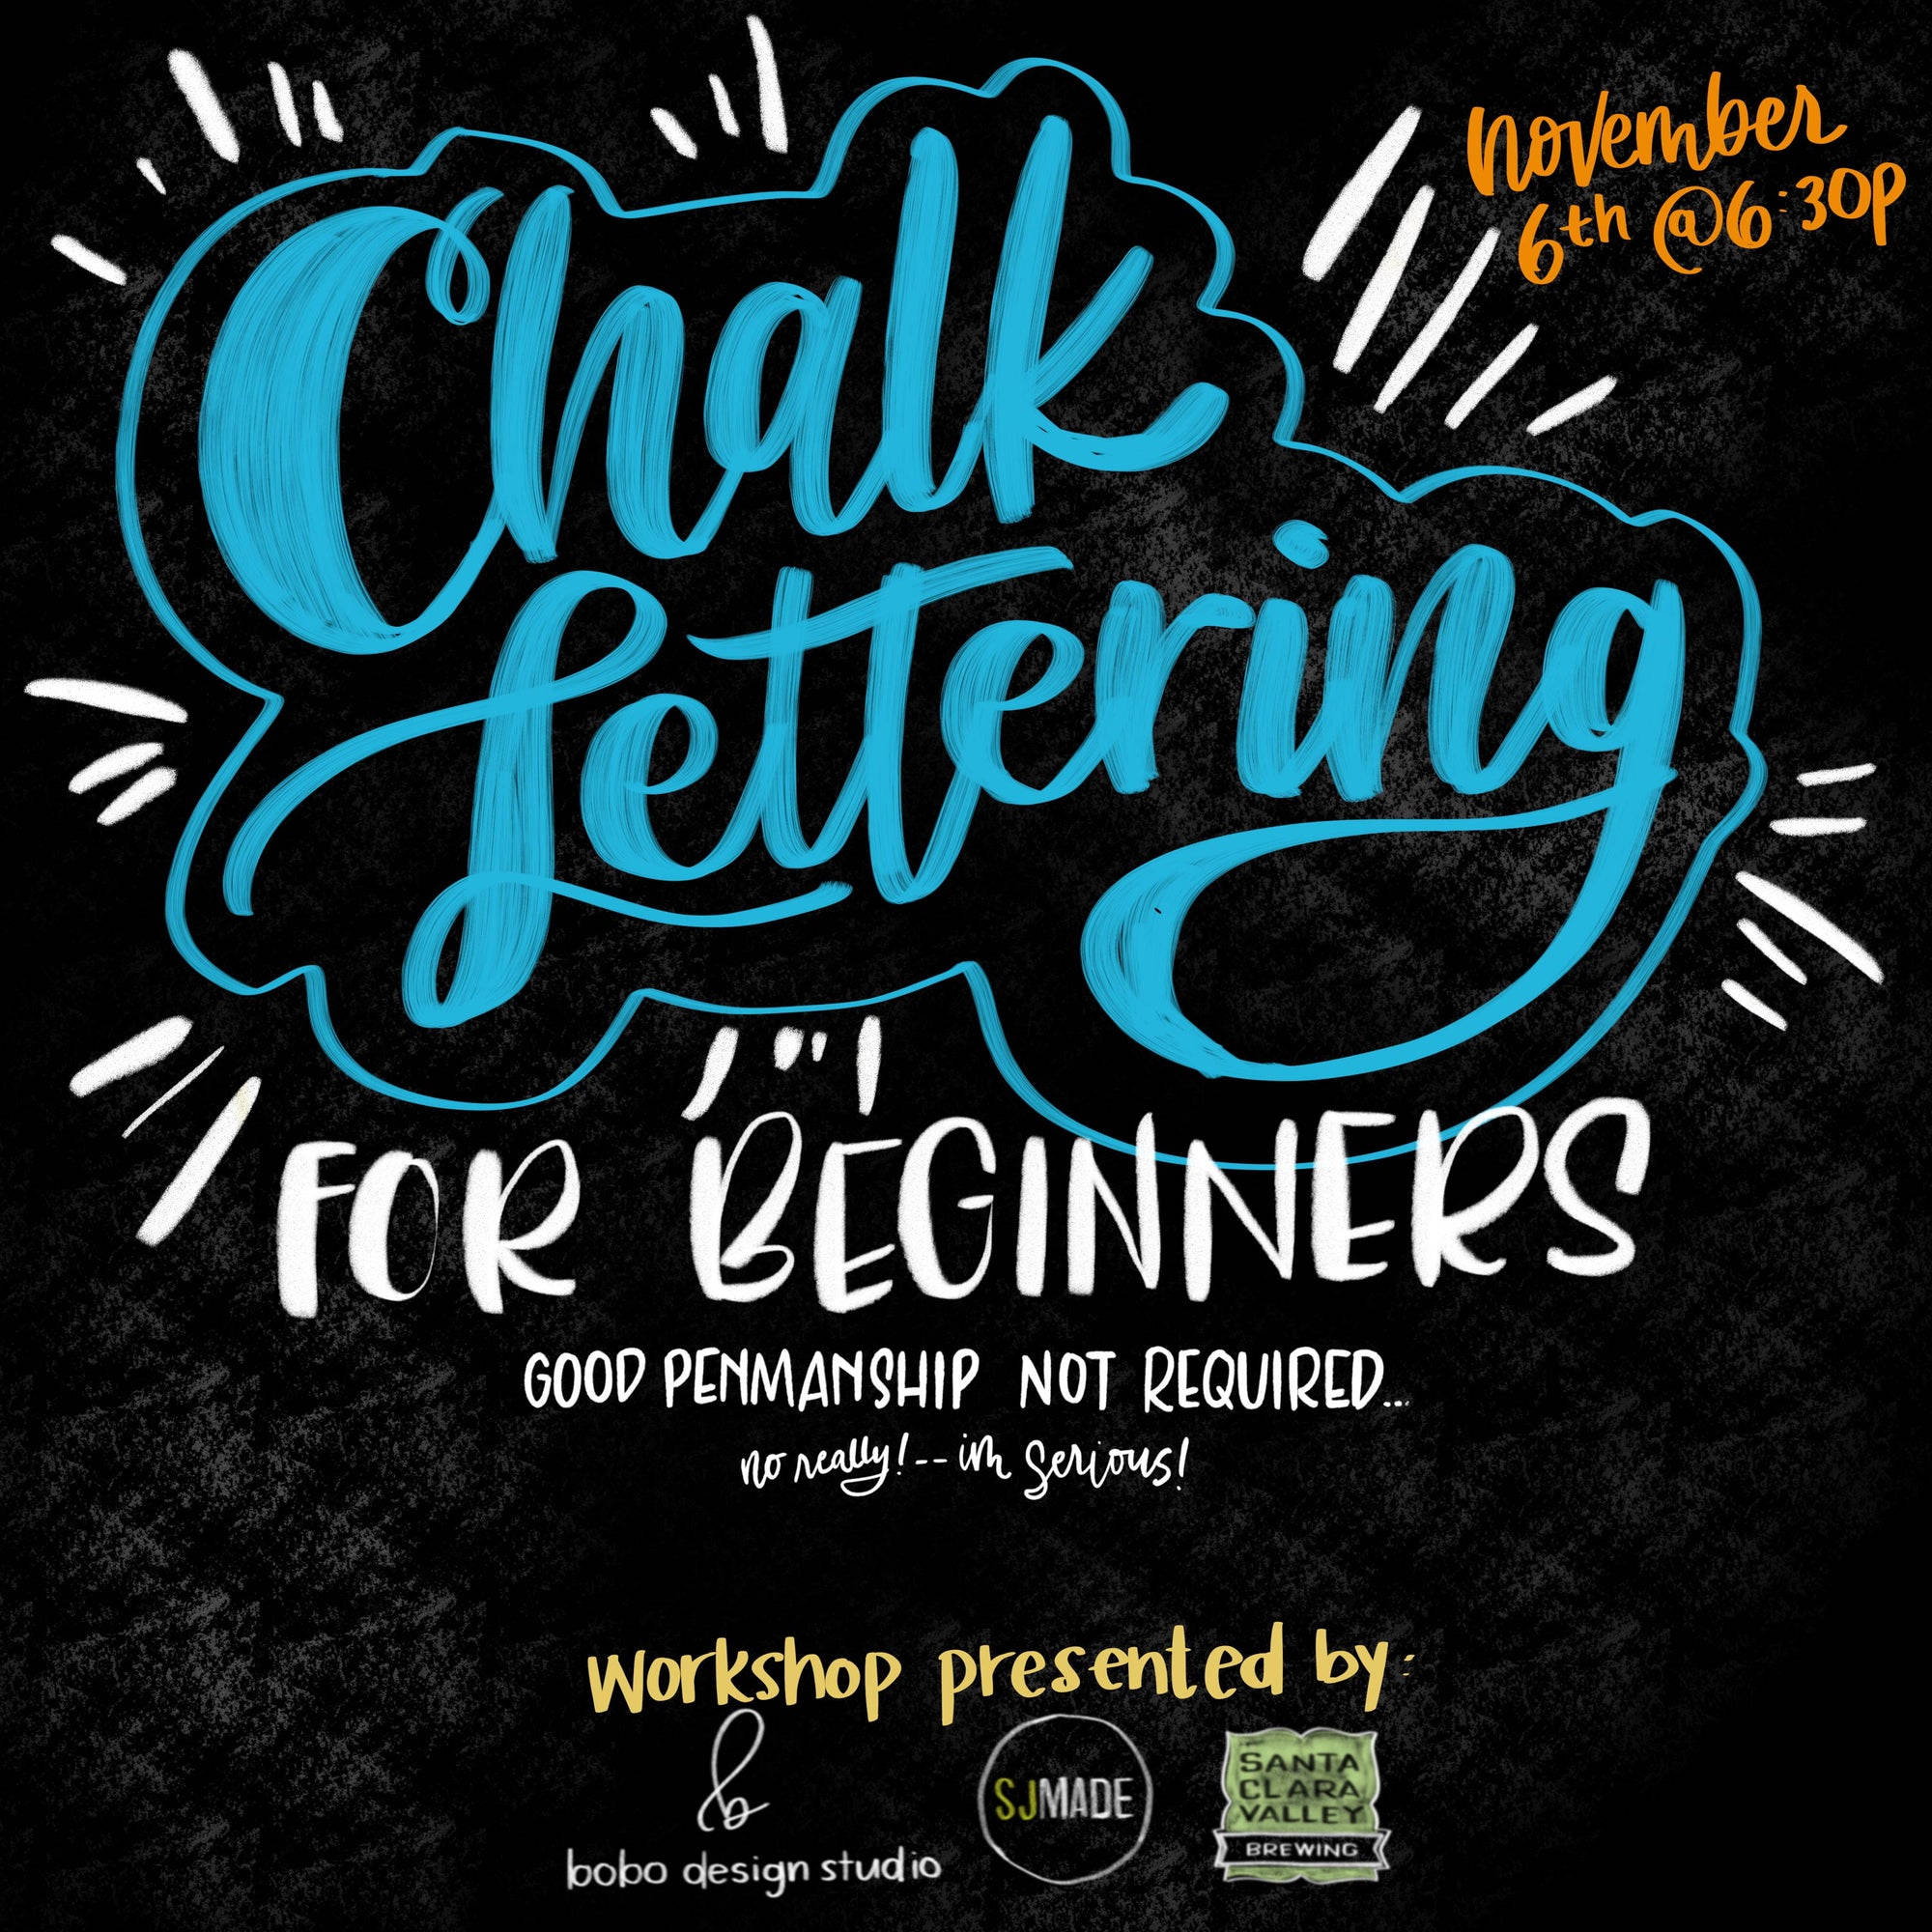 Chalk Lettering for Beginners Workshop is Live!